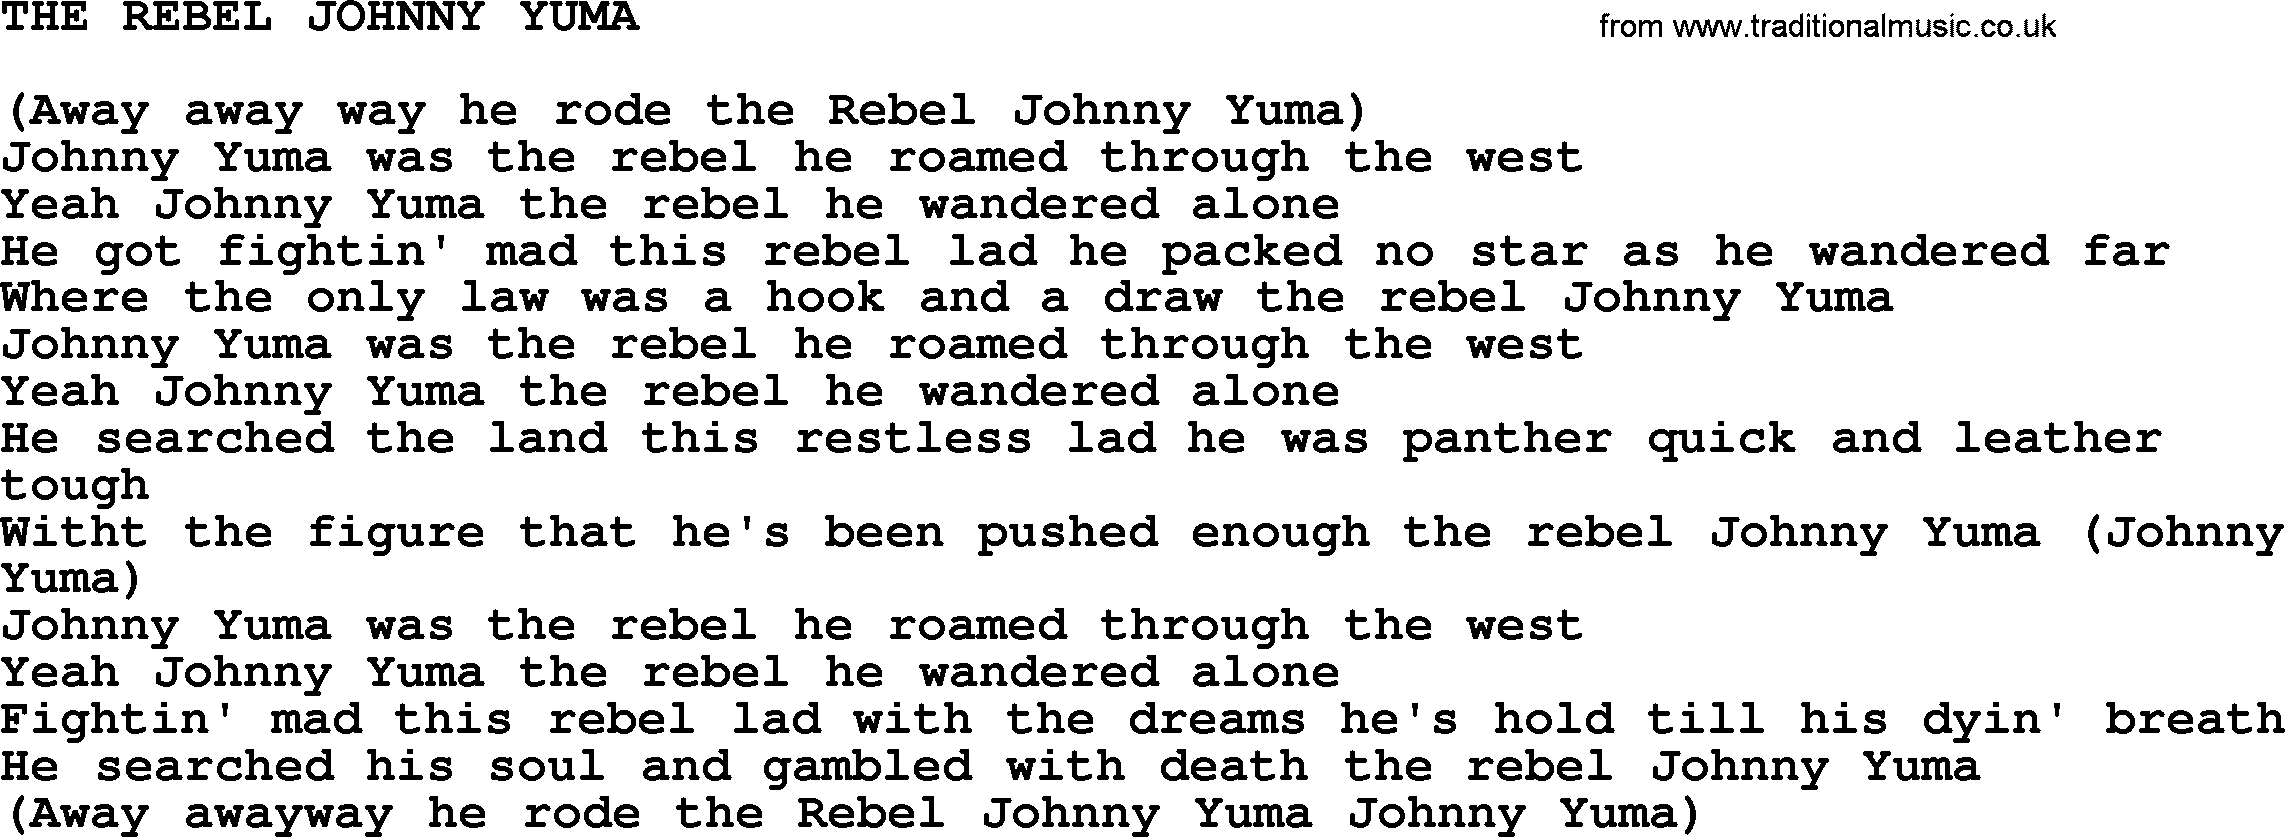 Johnny Cash song The Rebel Johnny Yuma.txt lyrics